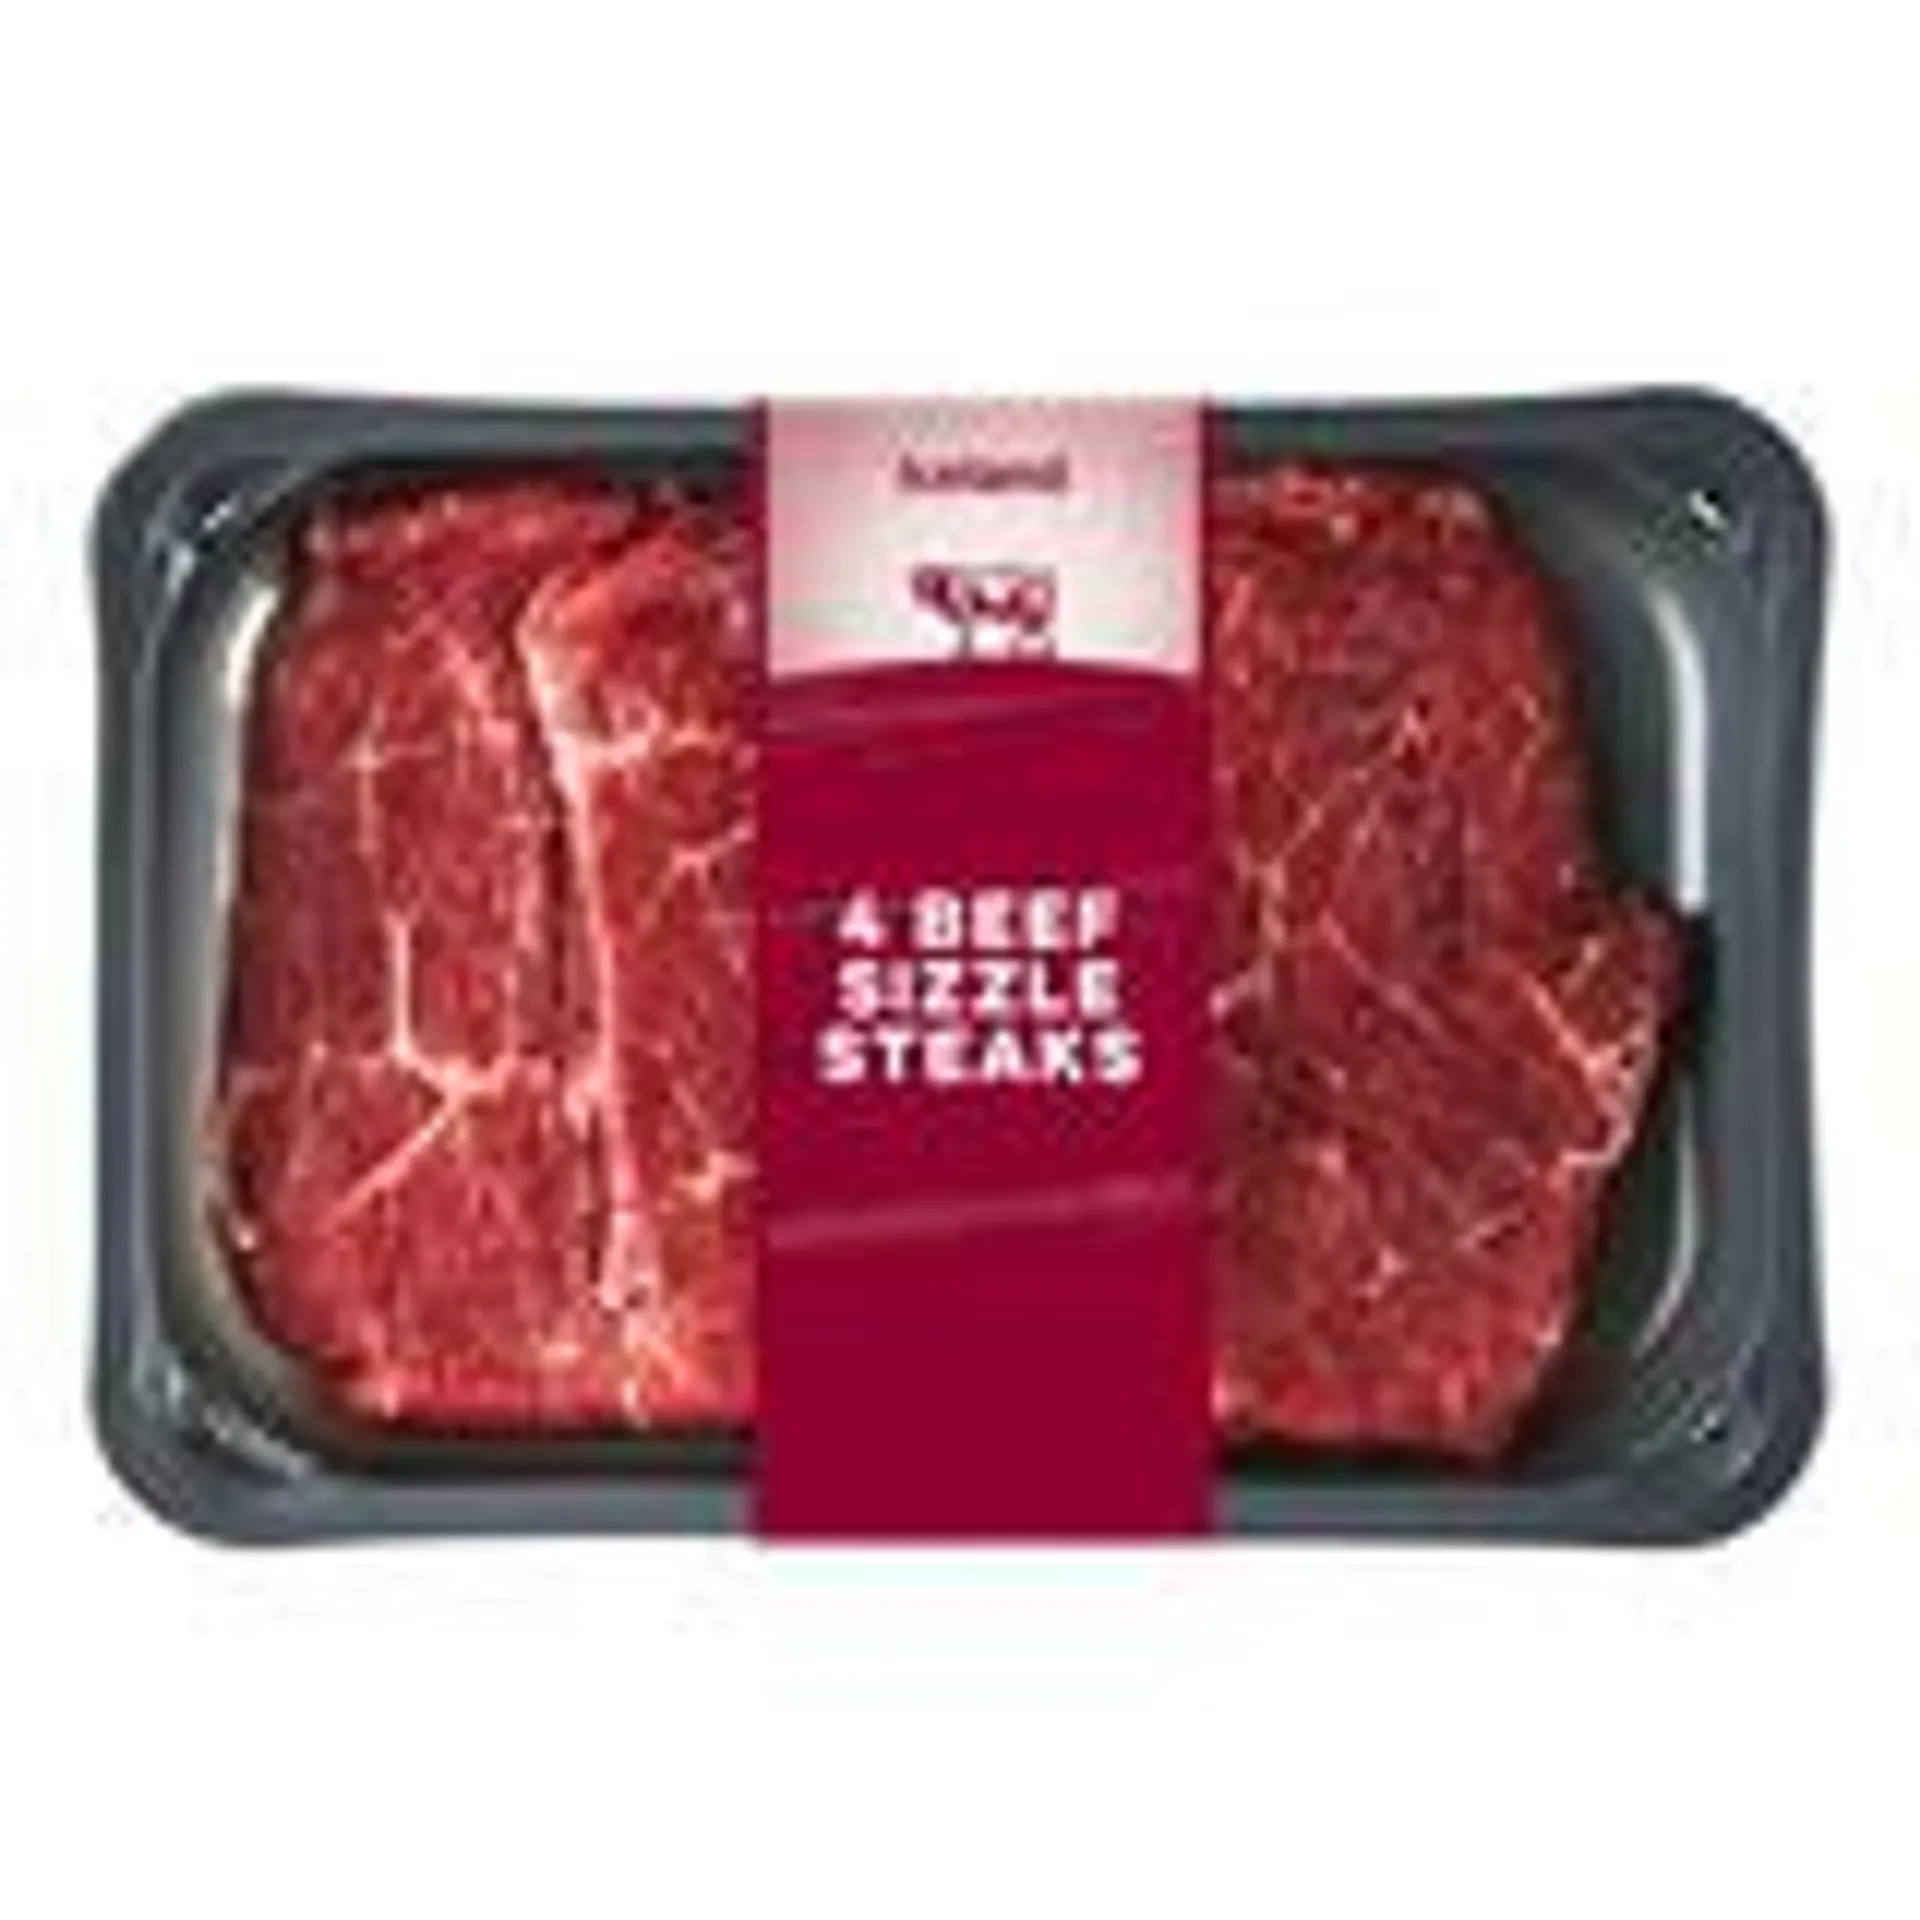 Iceland 4 Beef Sizzle Steaks 240g